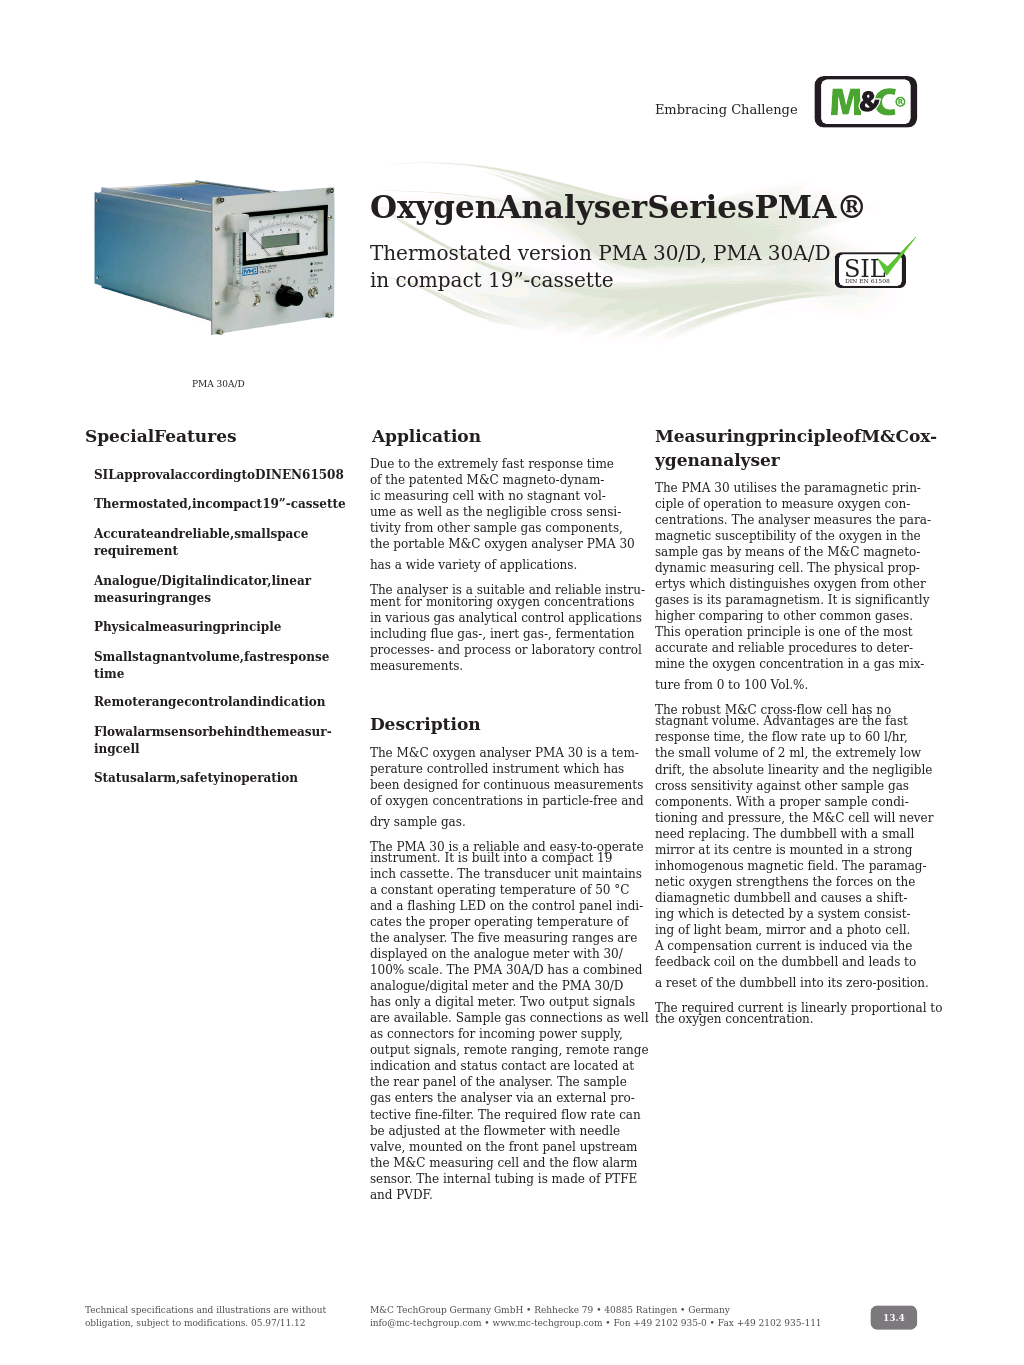 PMA 30A_D Data sheet